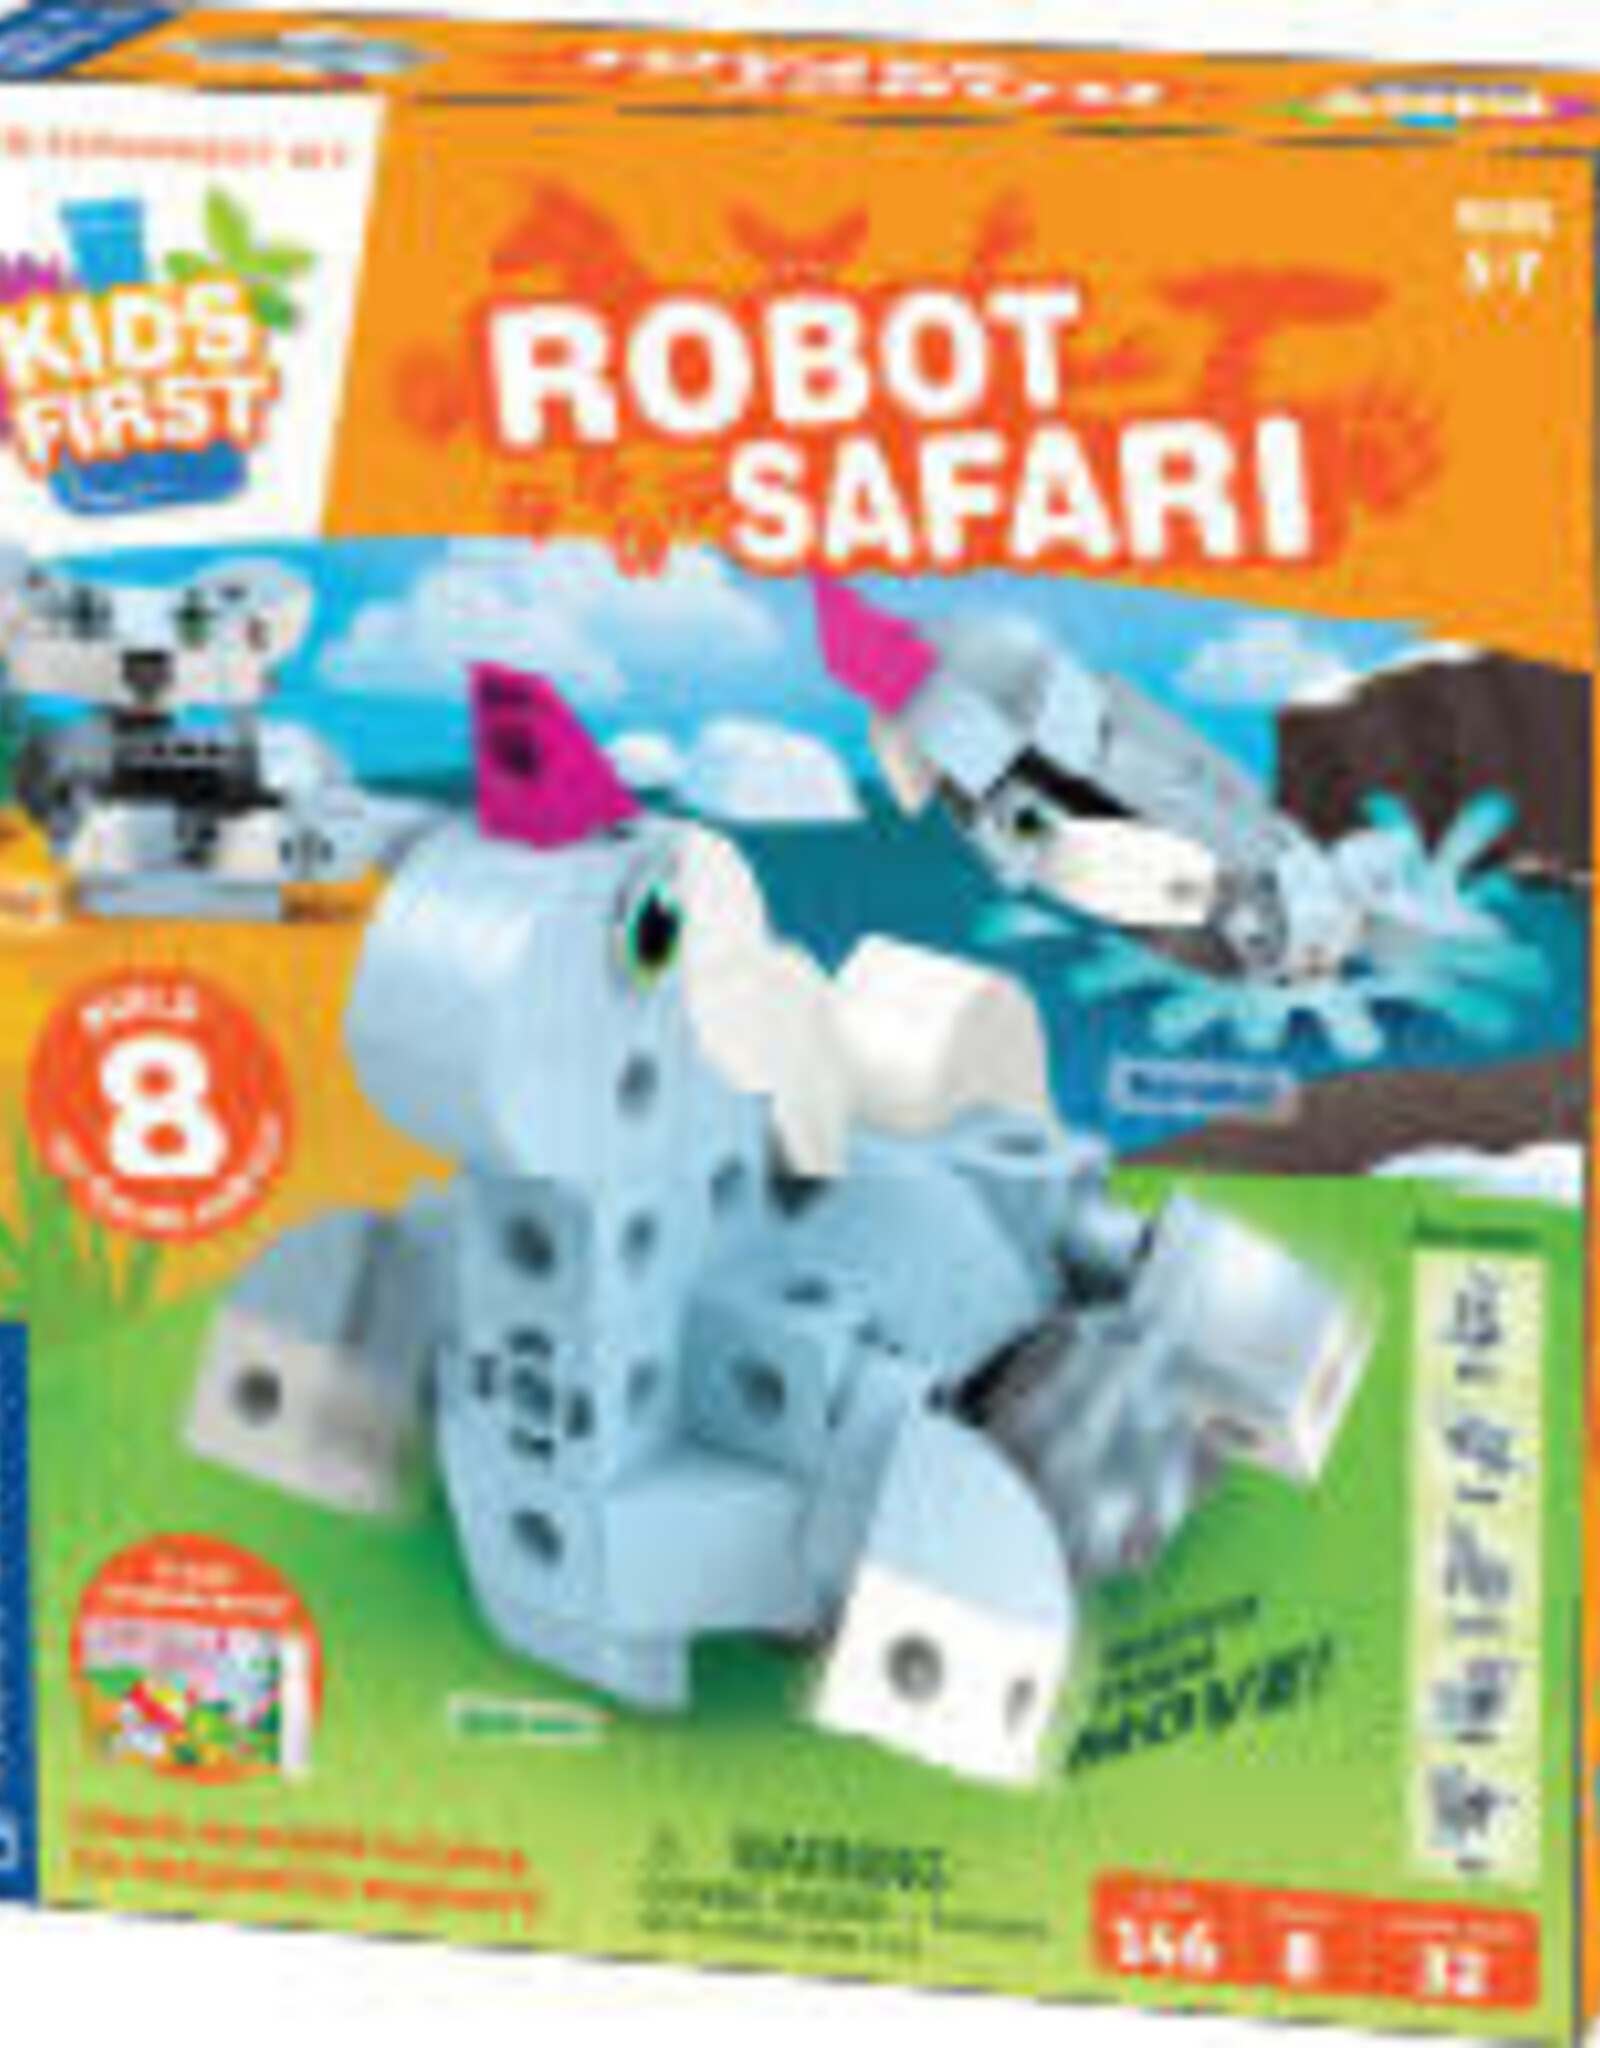 THAMES & KOSMOS Kids First: Robot Safari - Introduction to Motorized Machines